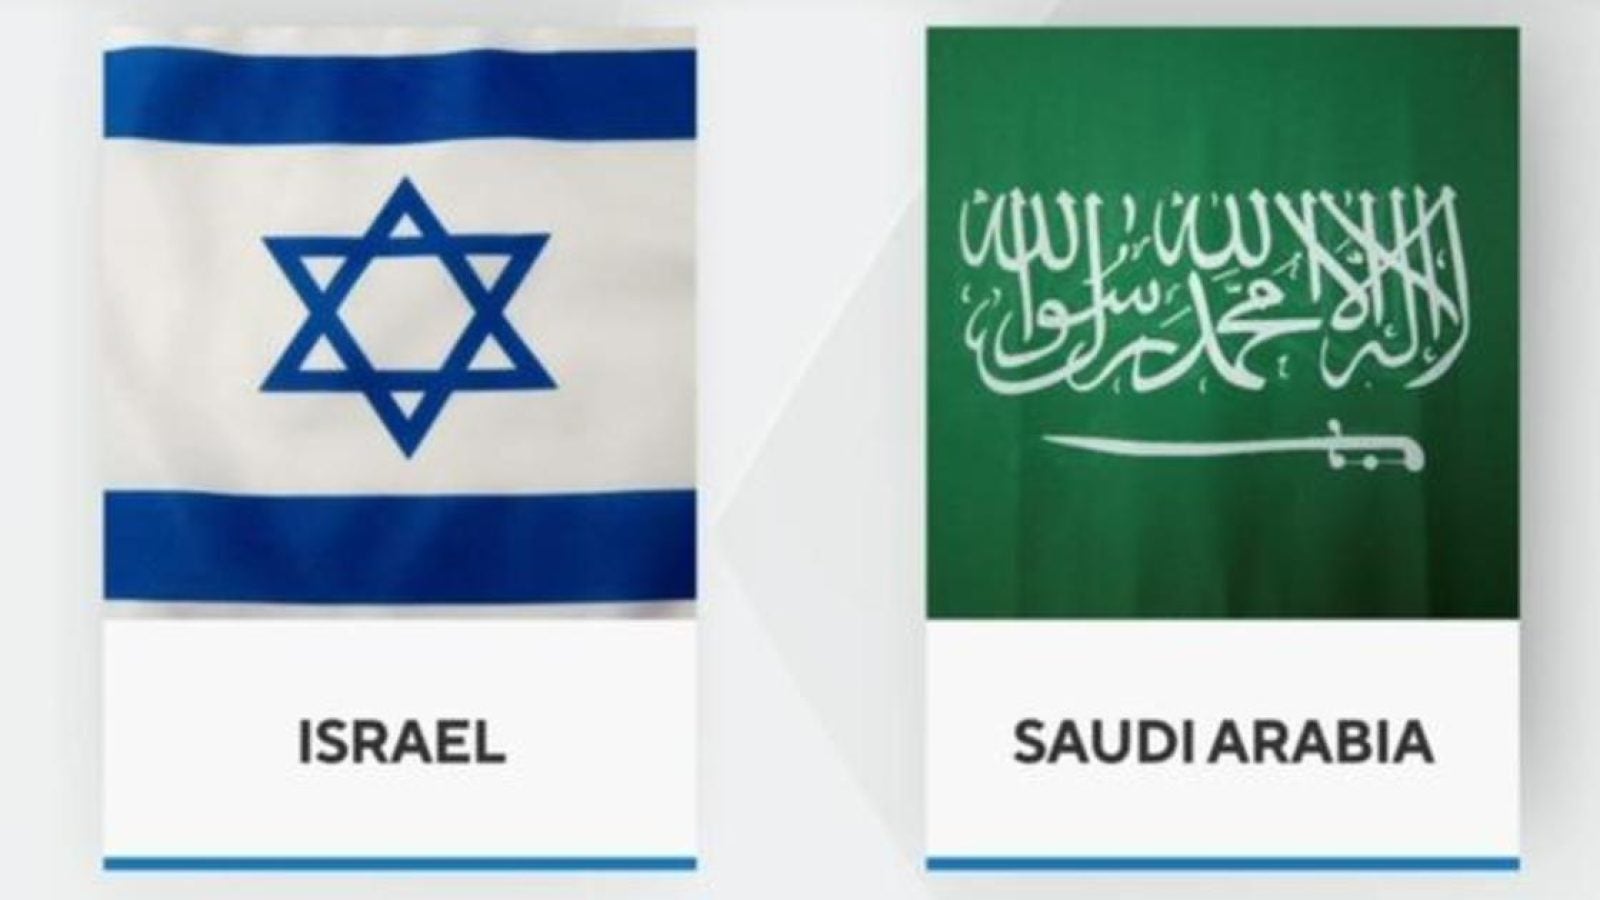 State Flags of both Israel and Saudi Arabia